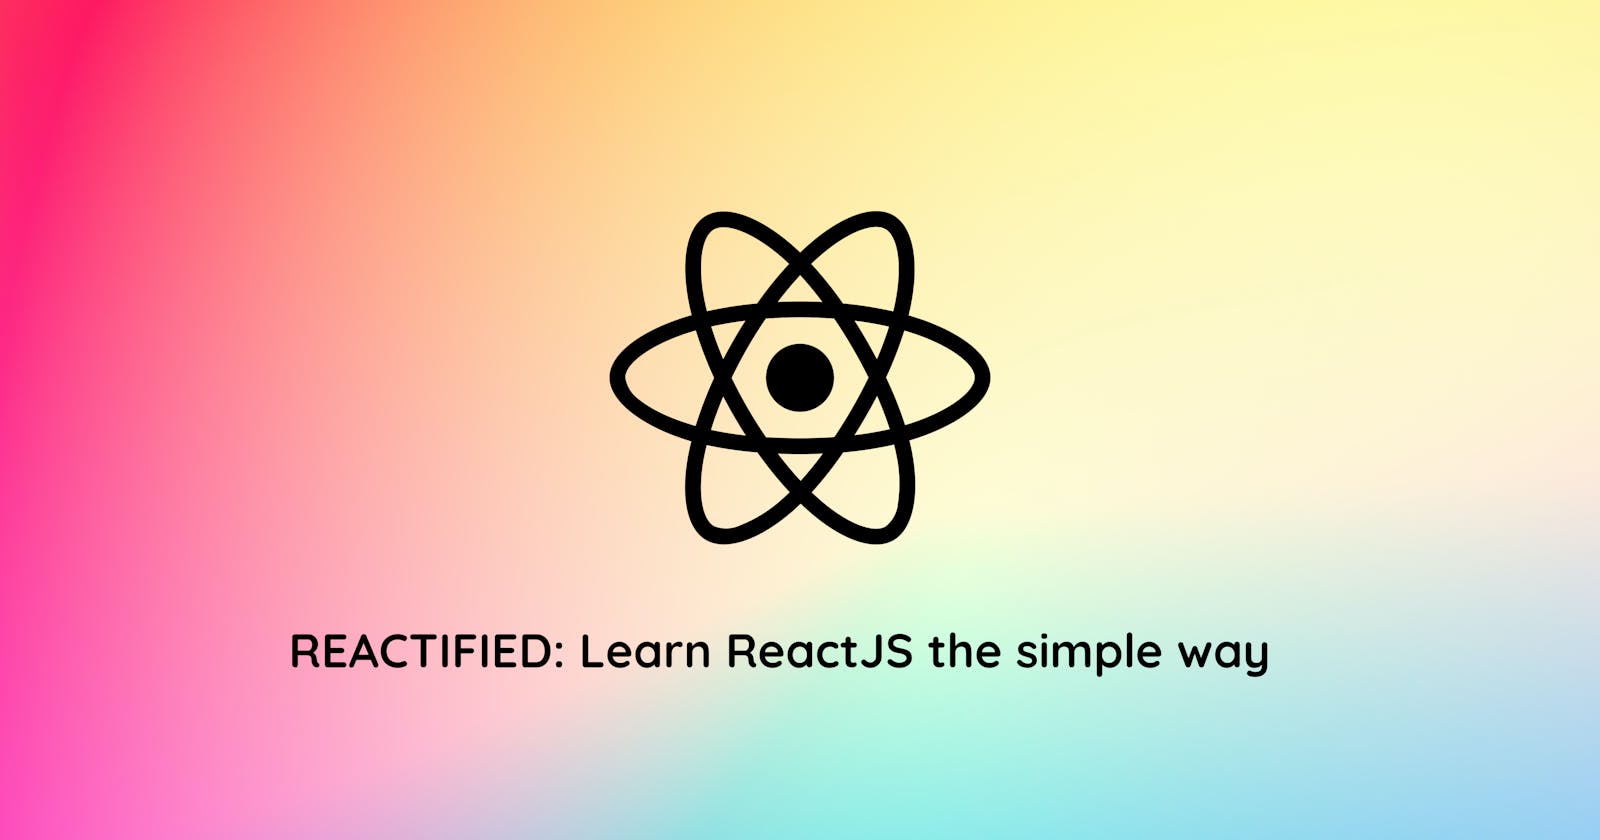 REACTIFIED: Learn ReactJS the simple way